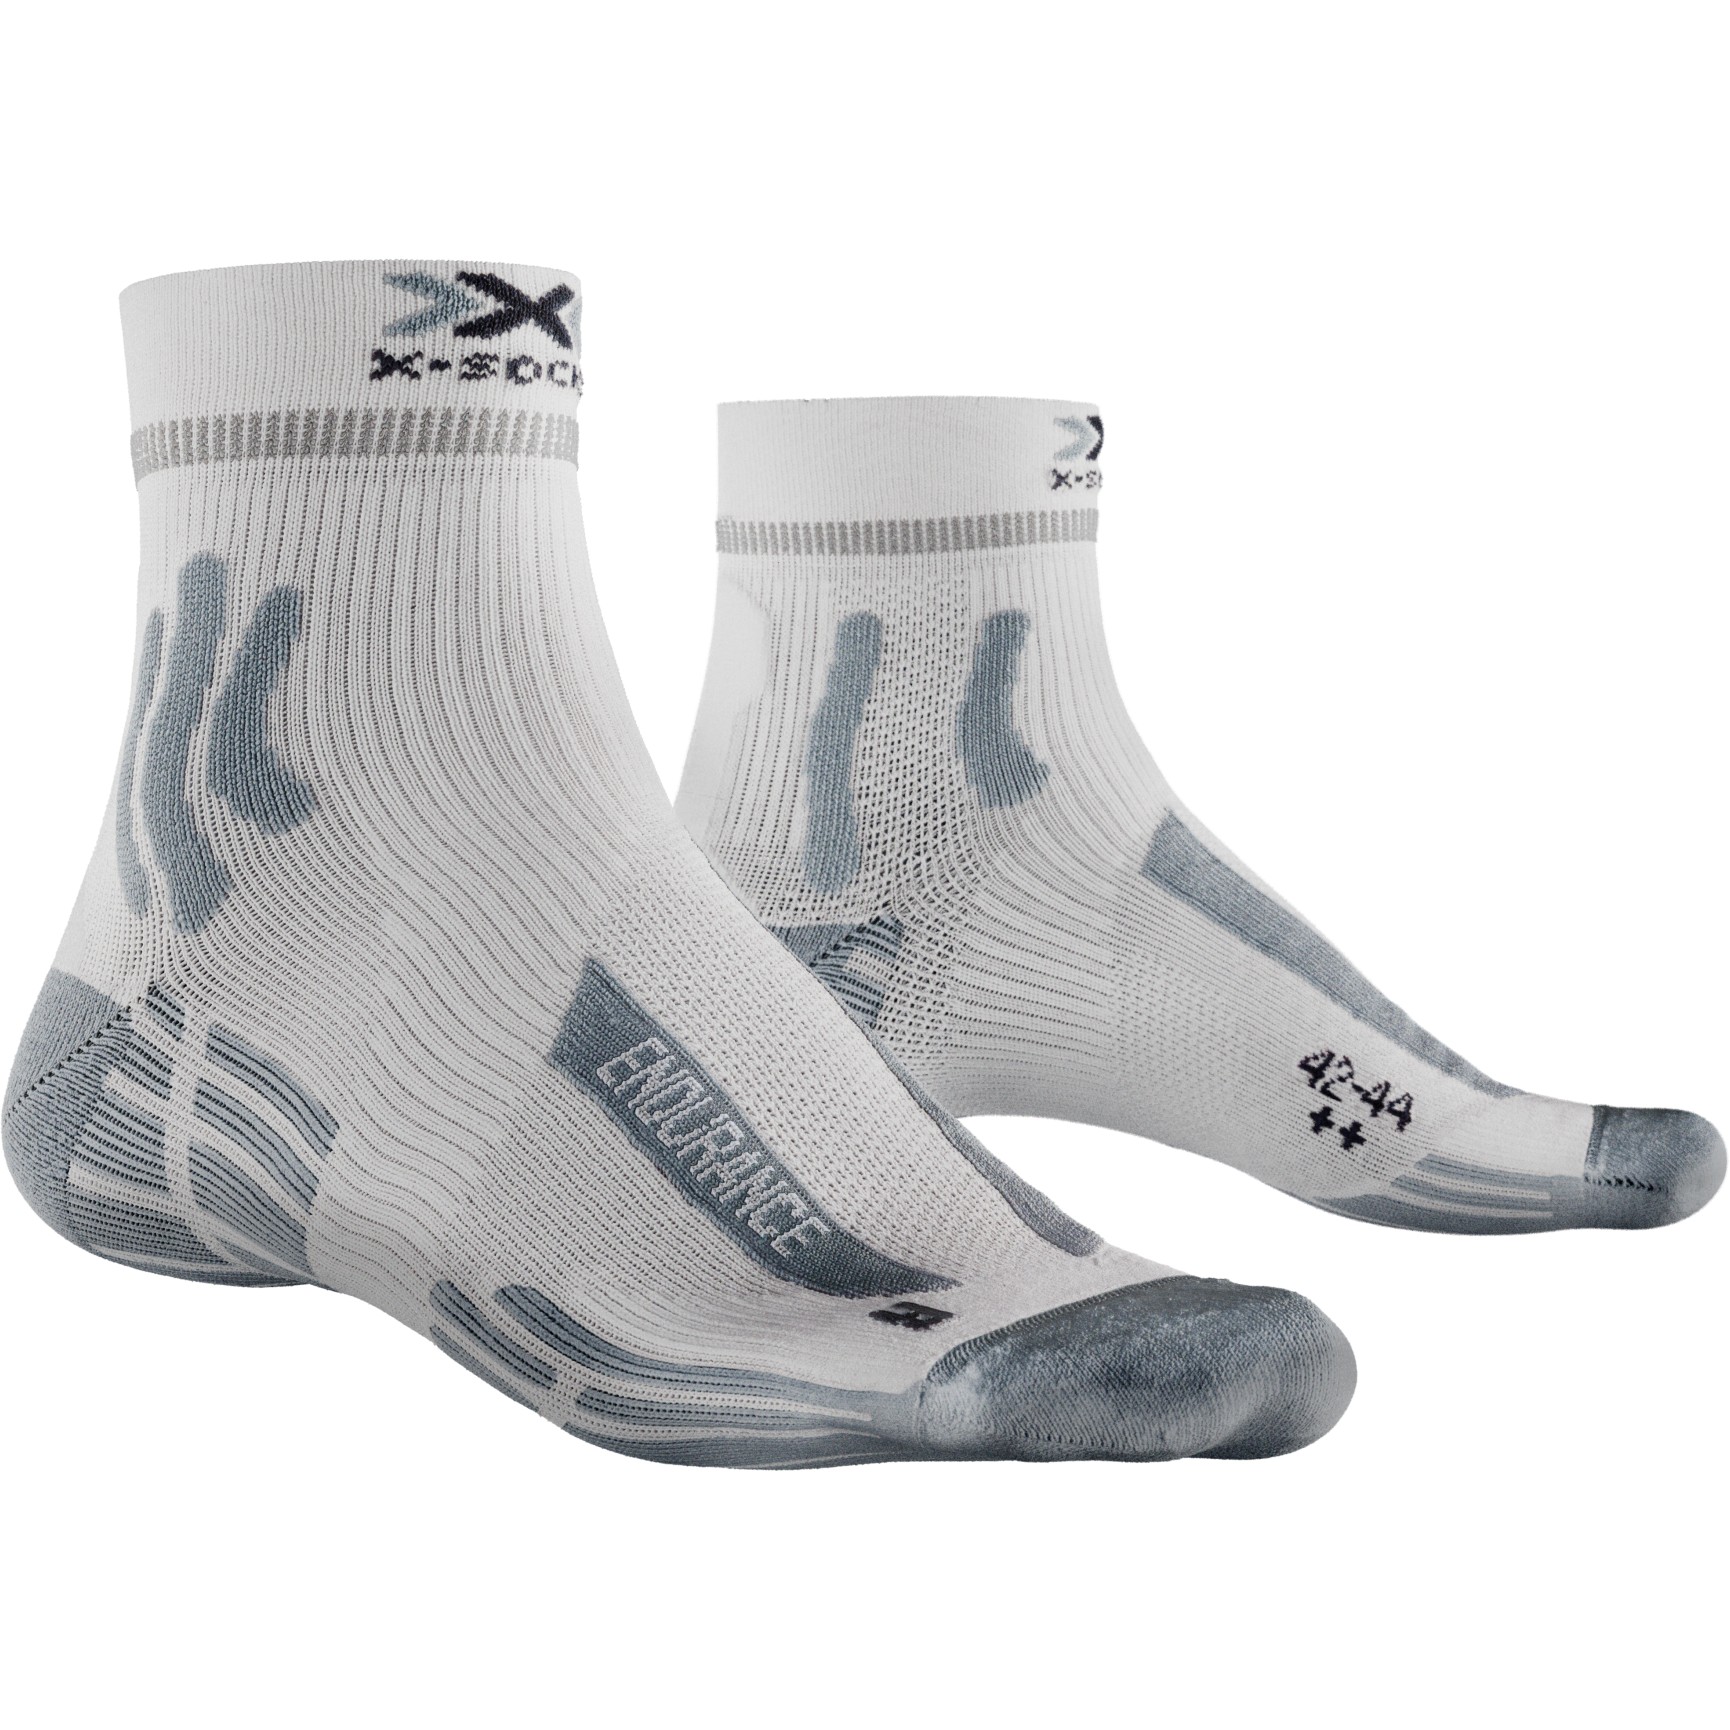 Productfoto van X-Socks Endurance 4.0 Hardloopsokken - arctic white/dolomite grey